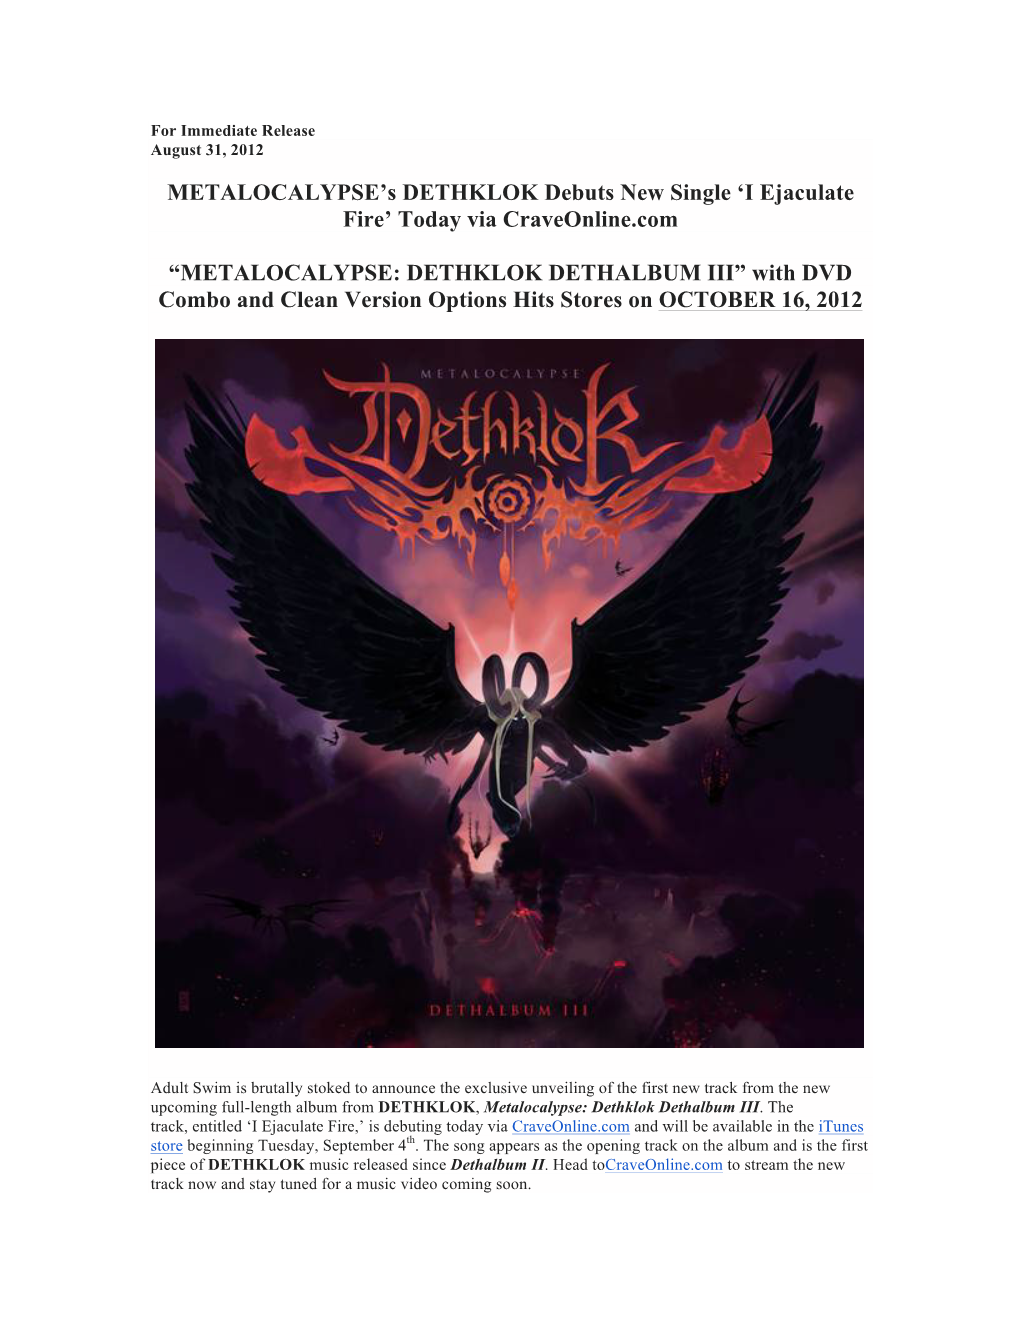 METALOCALYPSE: DETHKLOK DETHALBUM III” with DVD Combo and Clean Version Options Hits Stores on OCTOBER 16, 2012